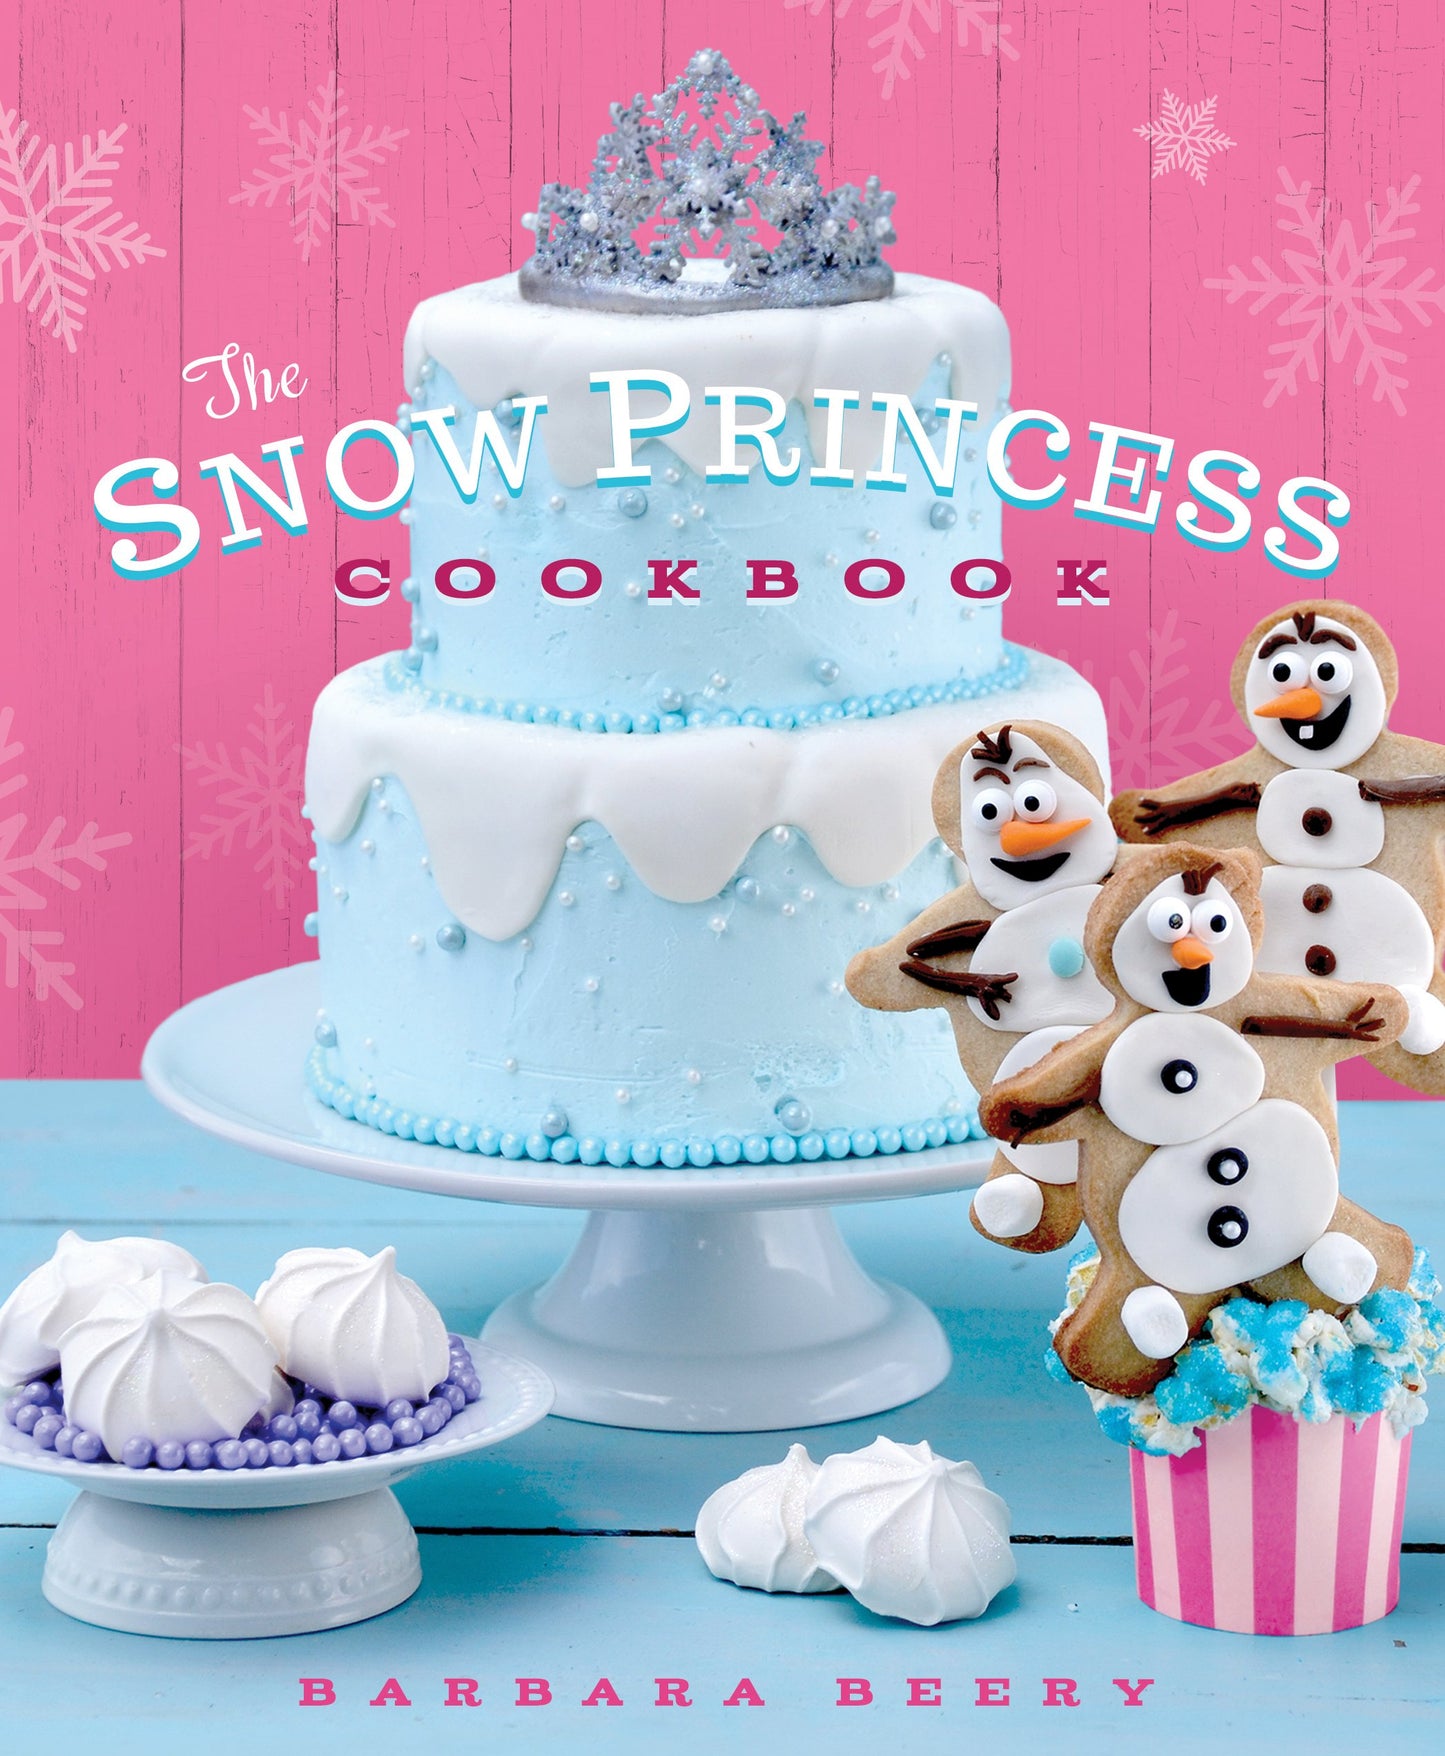 The Snow Princess cookbook